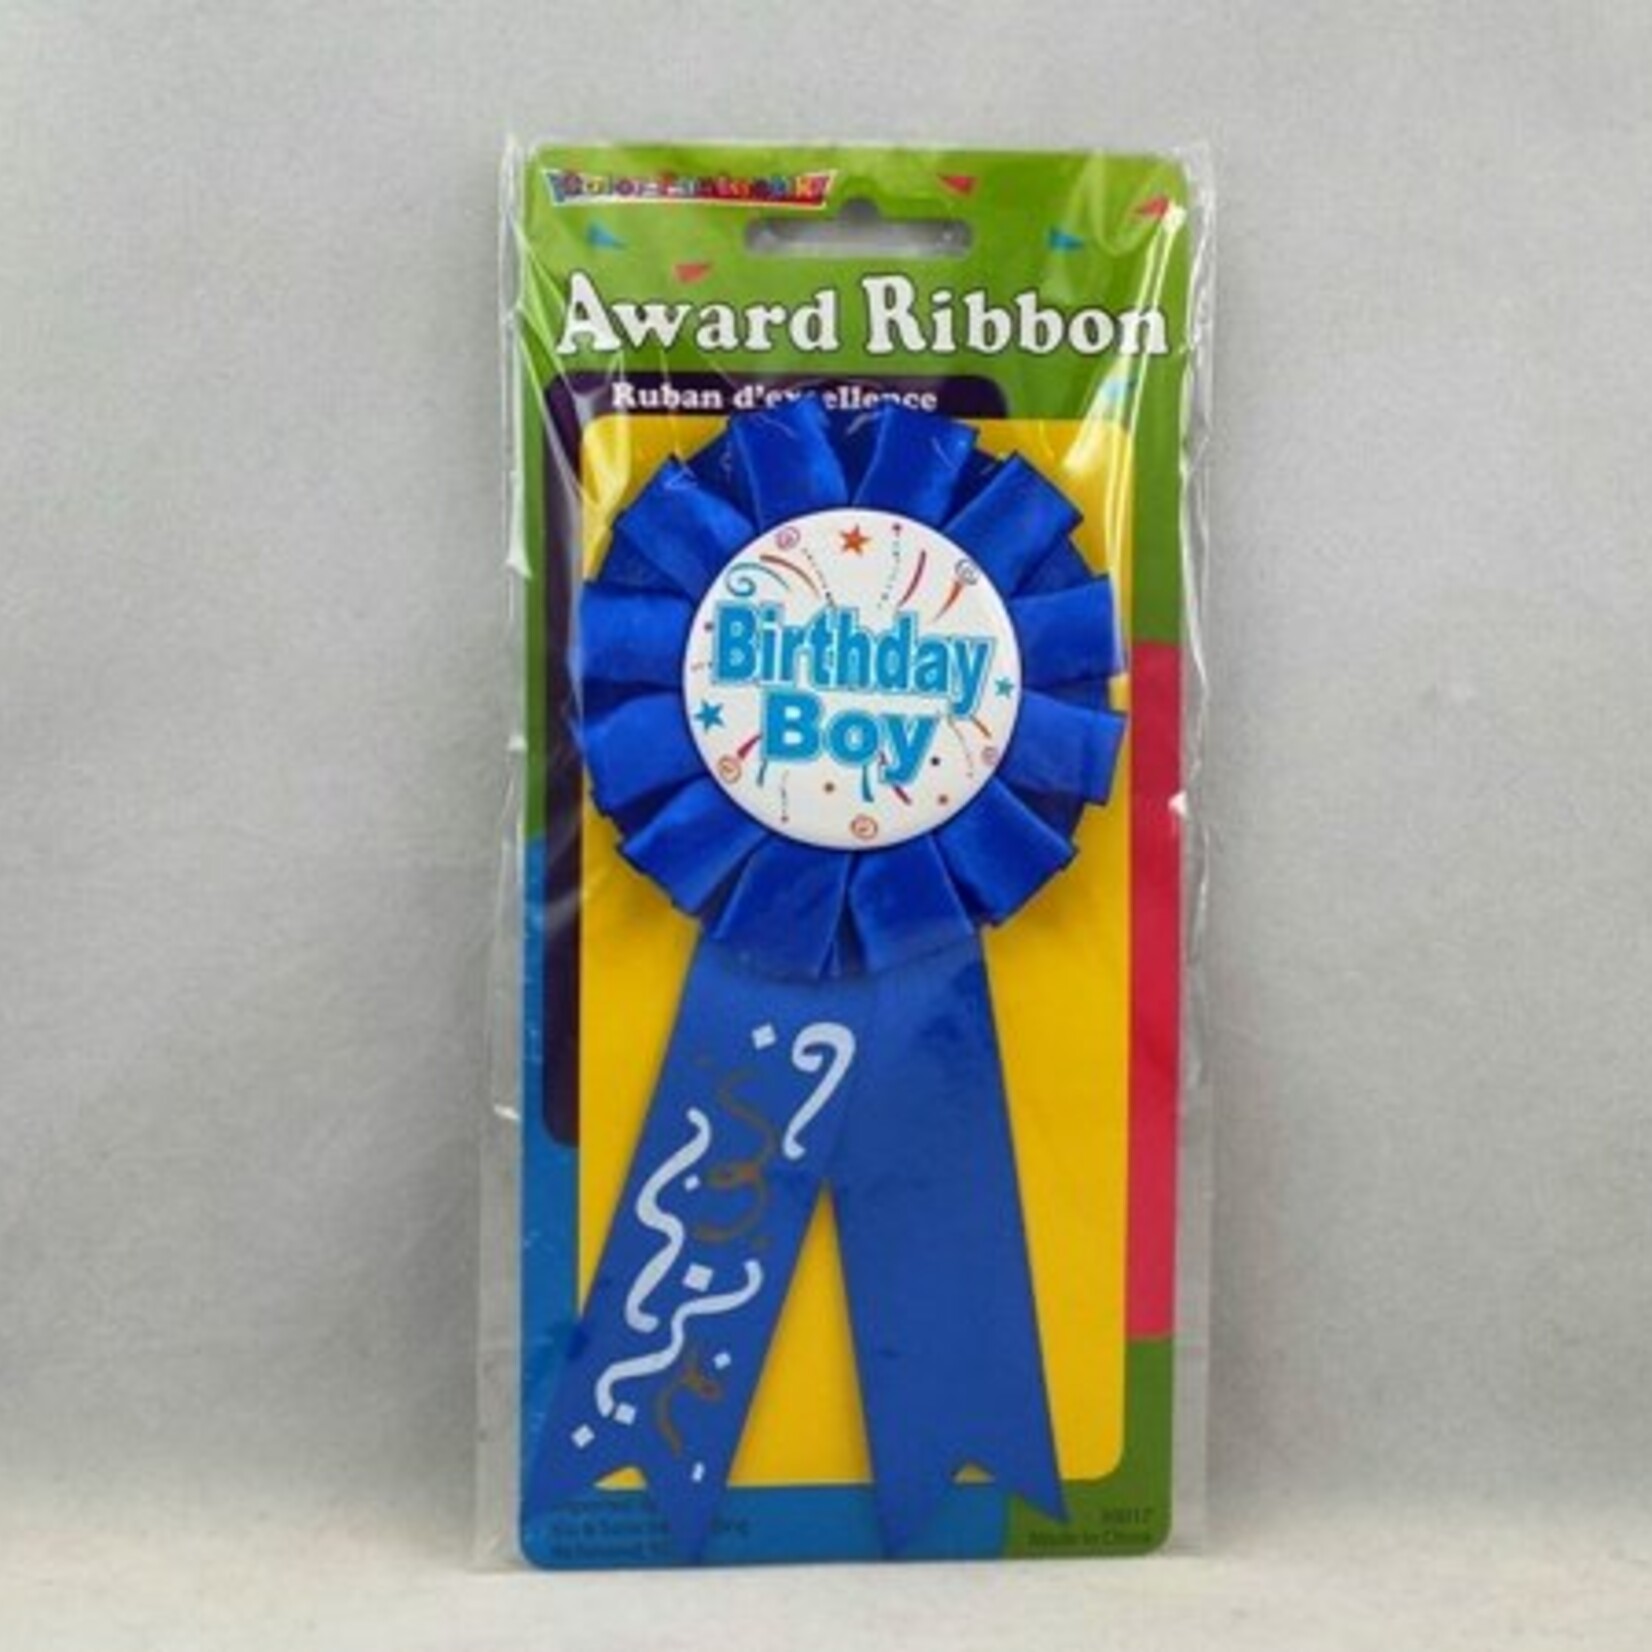 HAPPY BIRTHDAY AWARD RIBBON, BOY